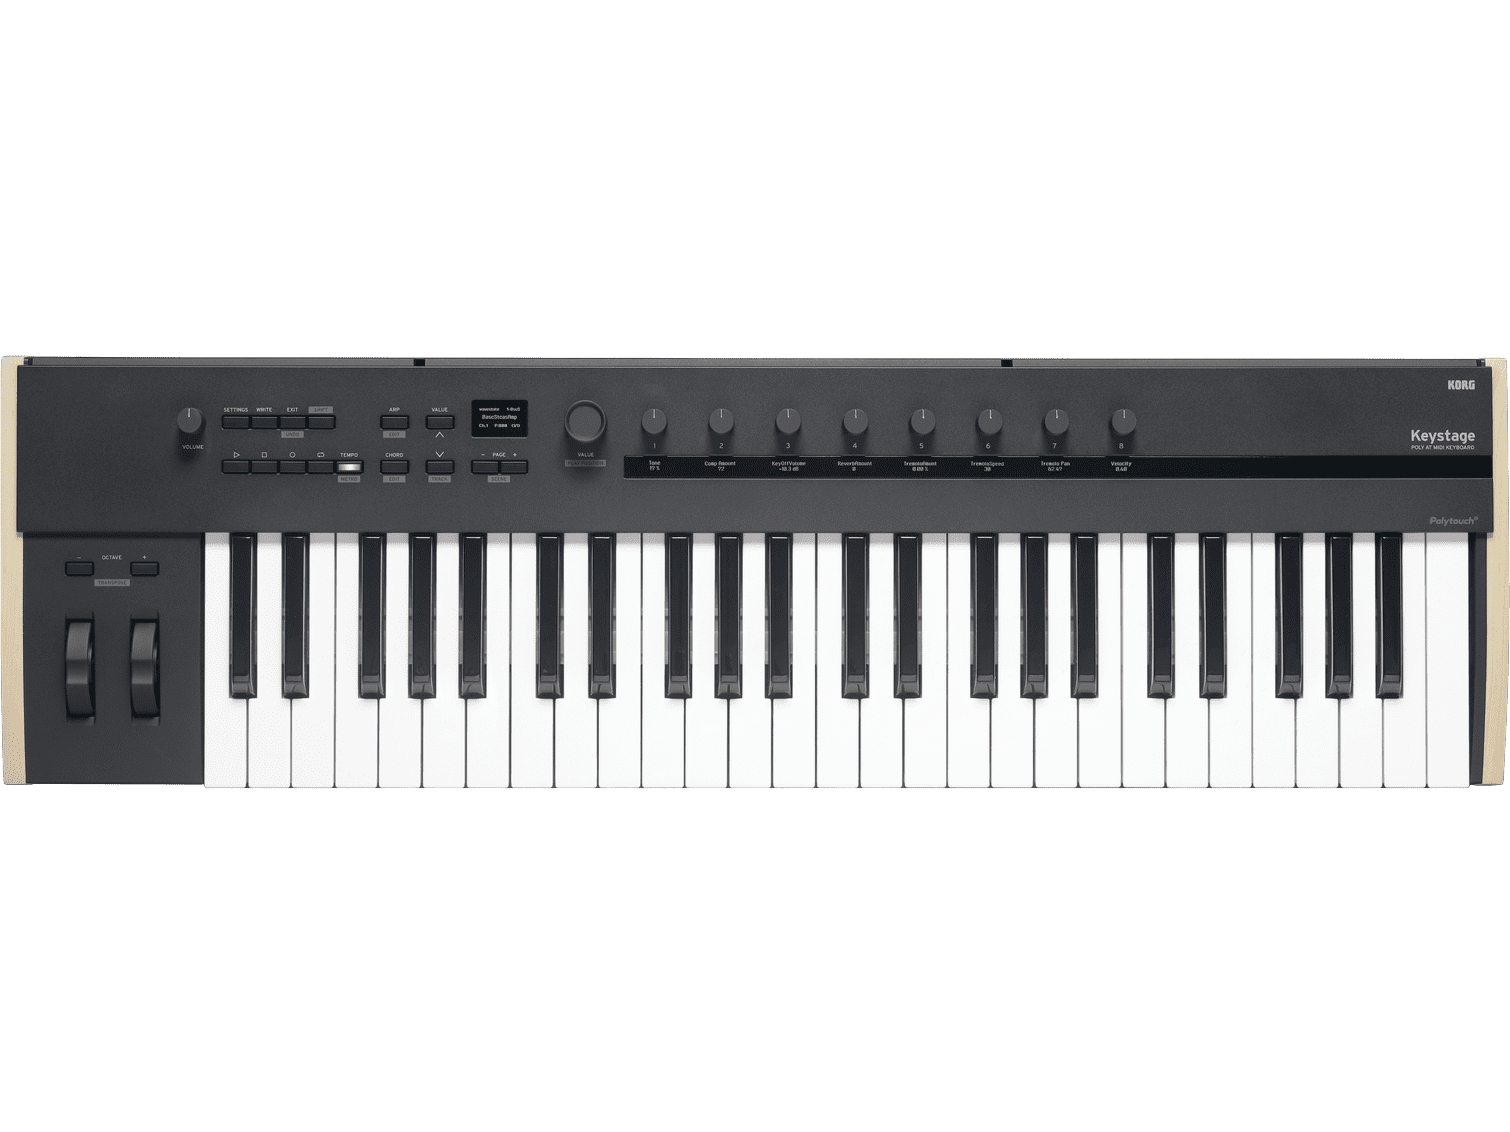 #Keyboard length_49 Keys